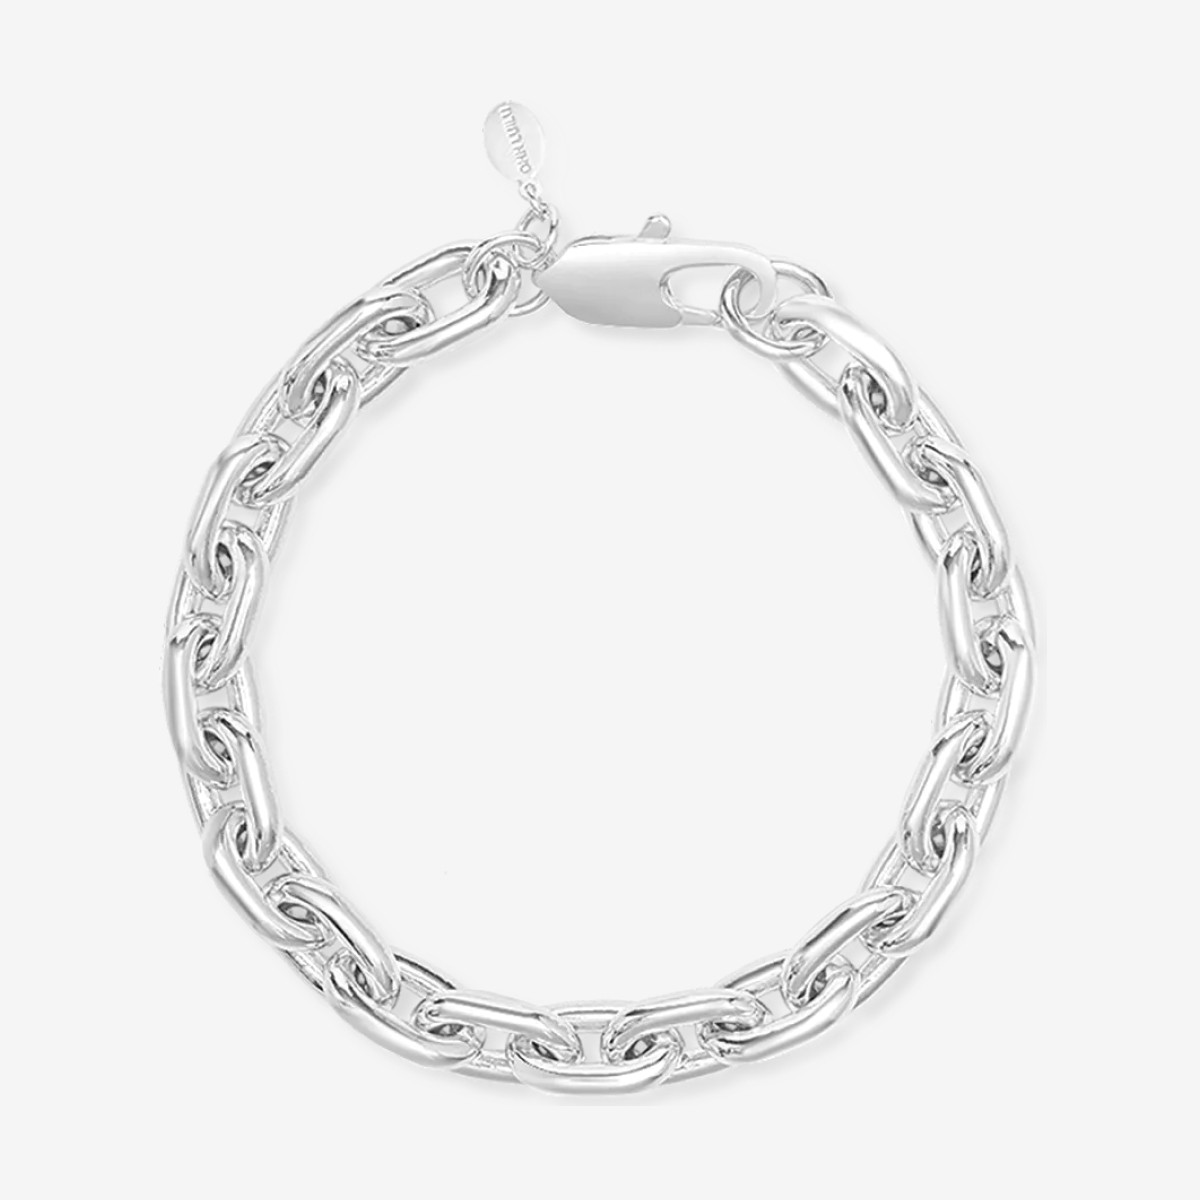 Chunky Bracelet 19 cm - Armbänder - Silber